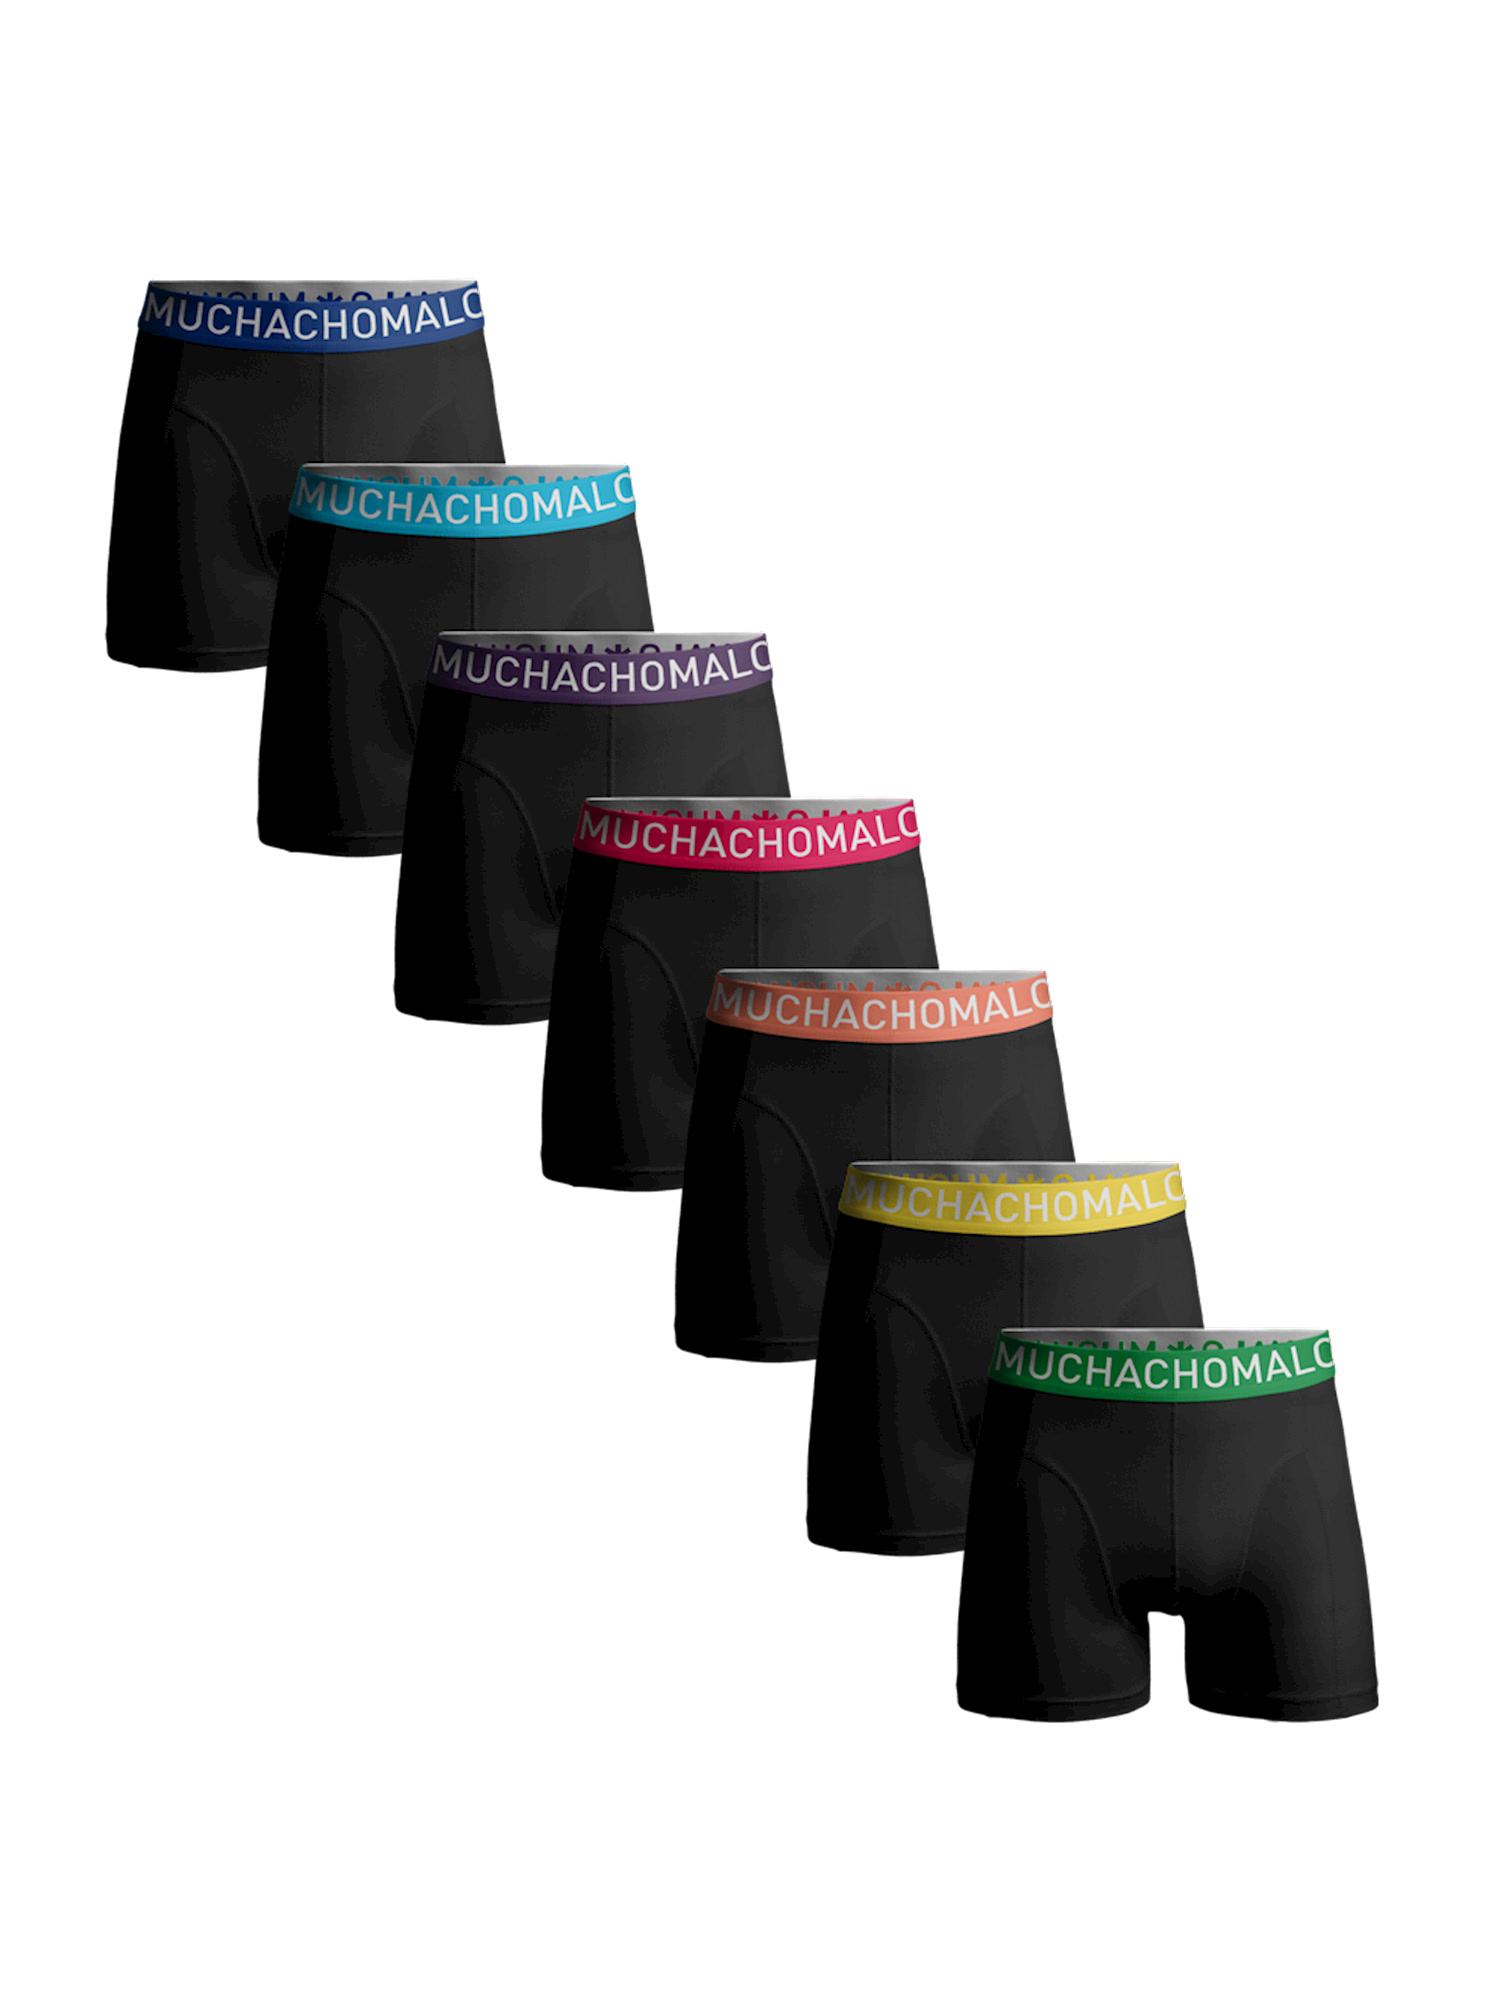 Боксеры Muchachomalo 7er-Set: Boxershorts, цвет Black/Black/Black/Black/Black/Black/Black bh19 black